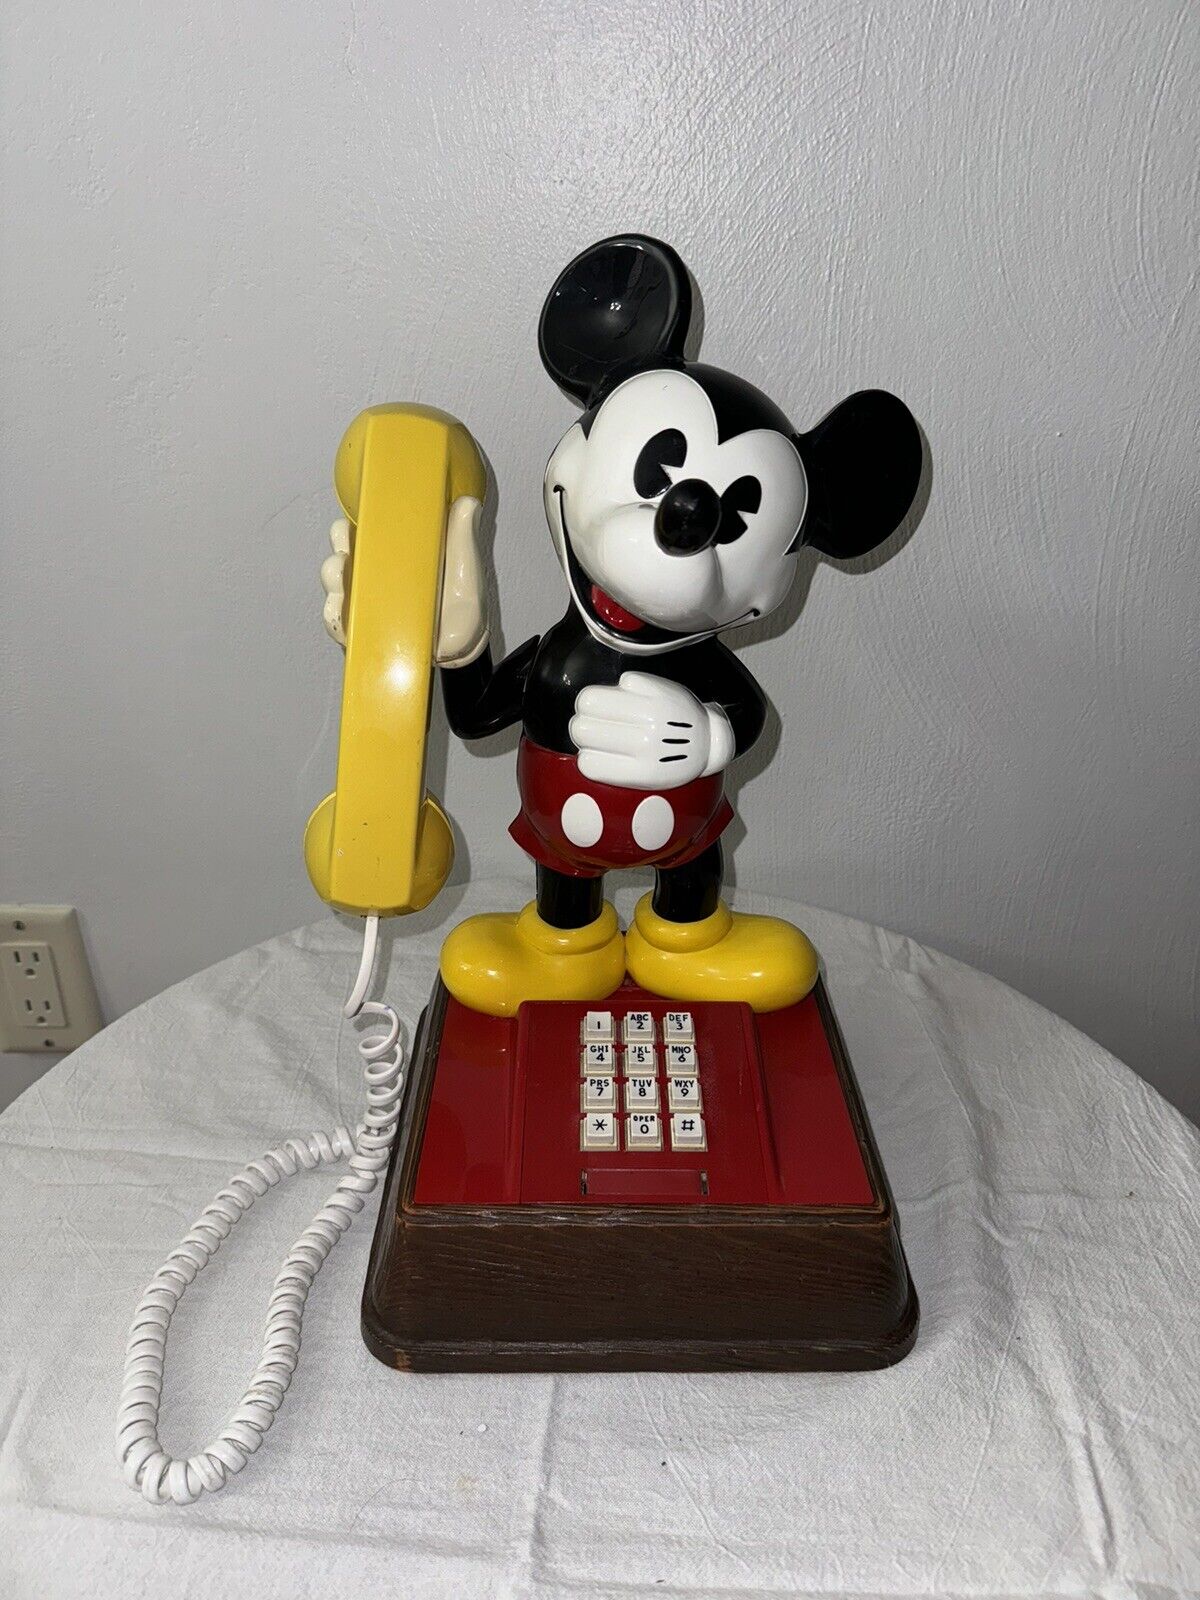 Vintage 1976 Walt Disney's Mickey Mouse Telephone - EXCELLENT